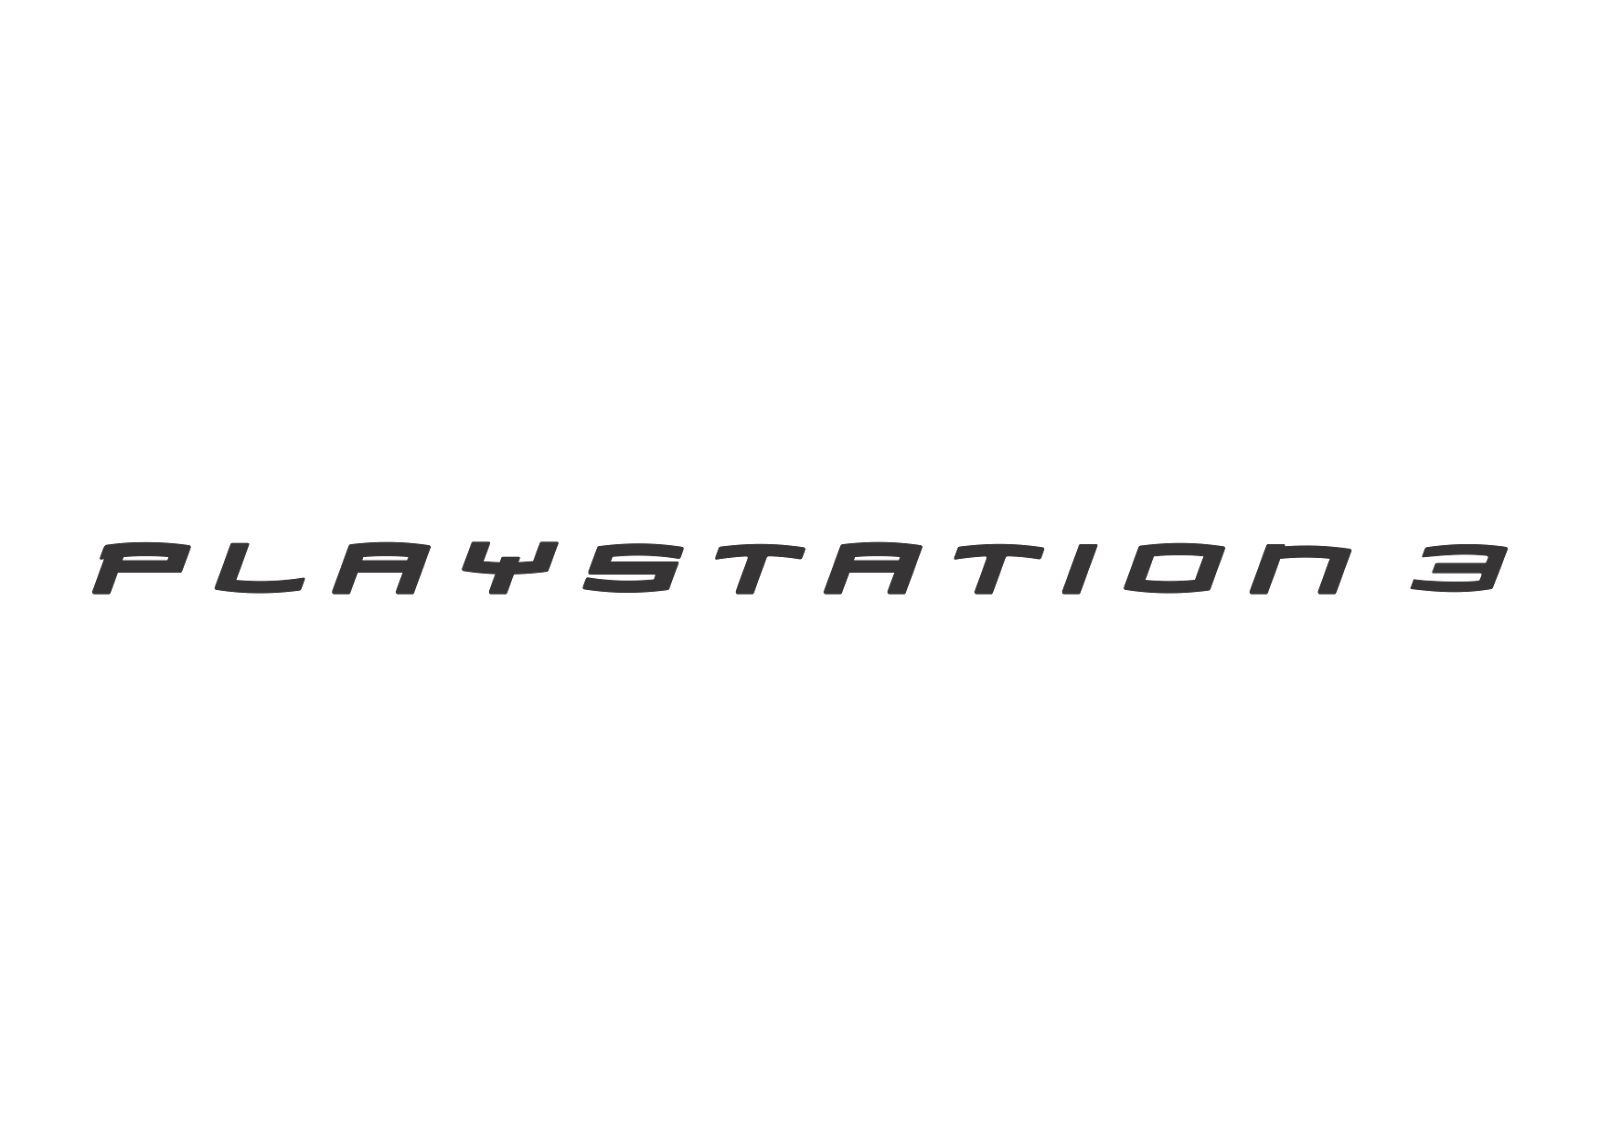 playstation 4 logo white png